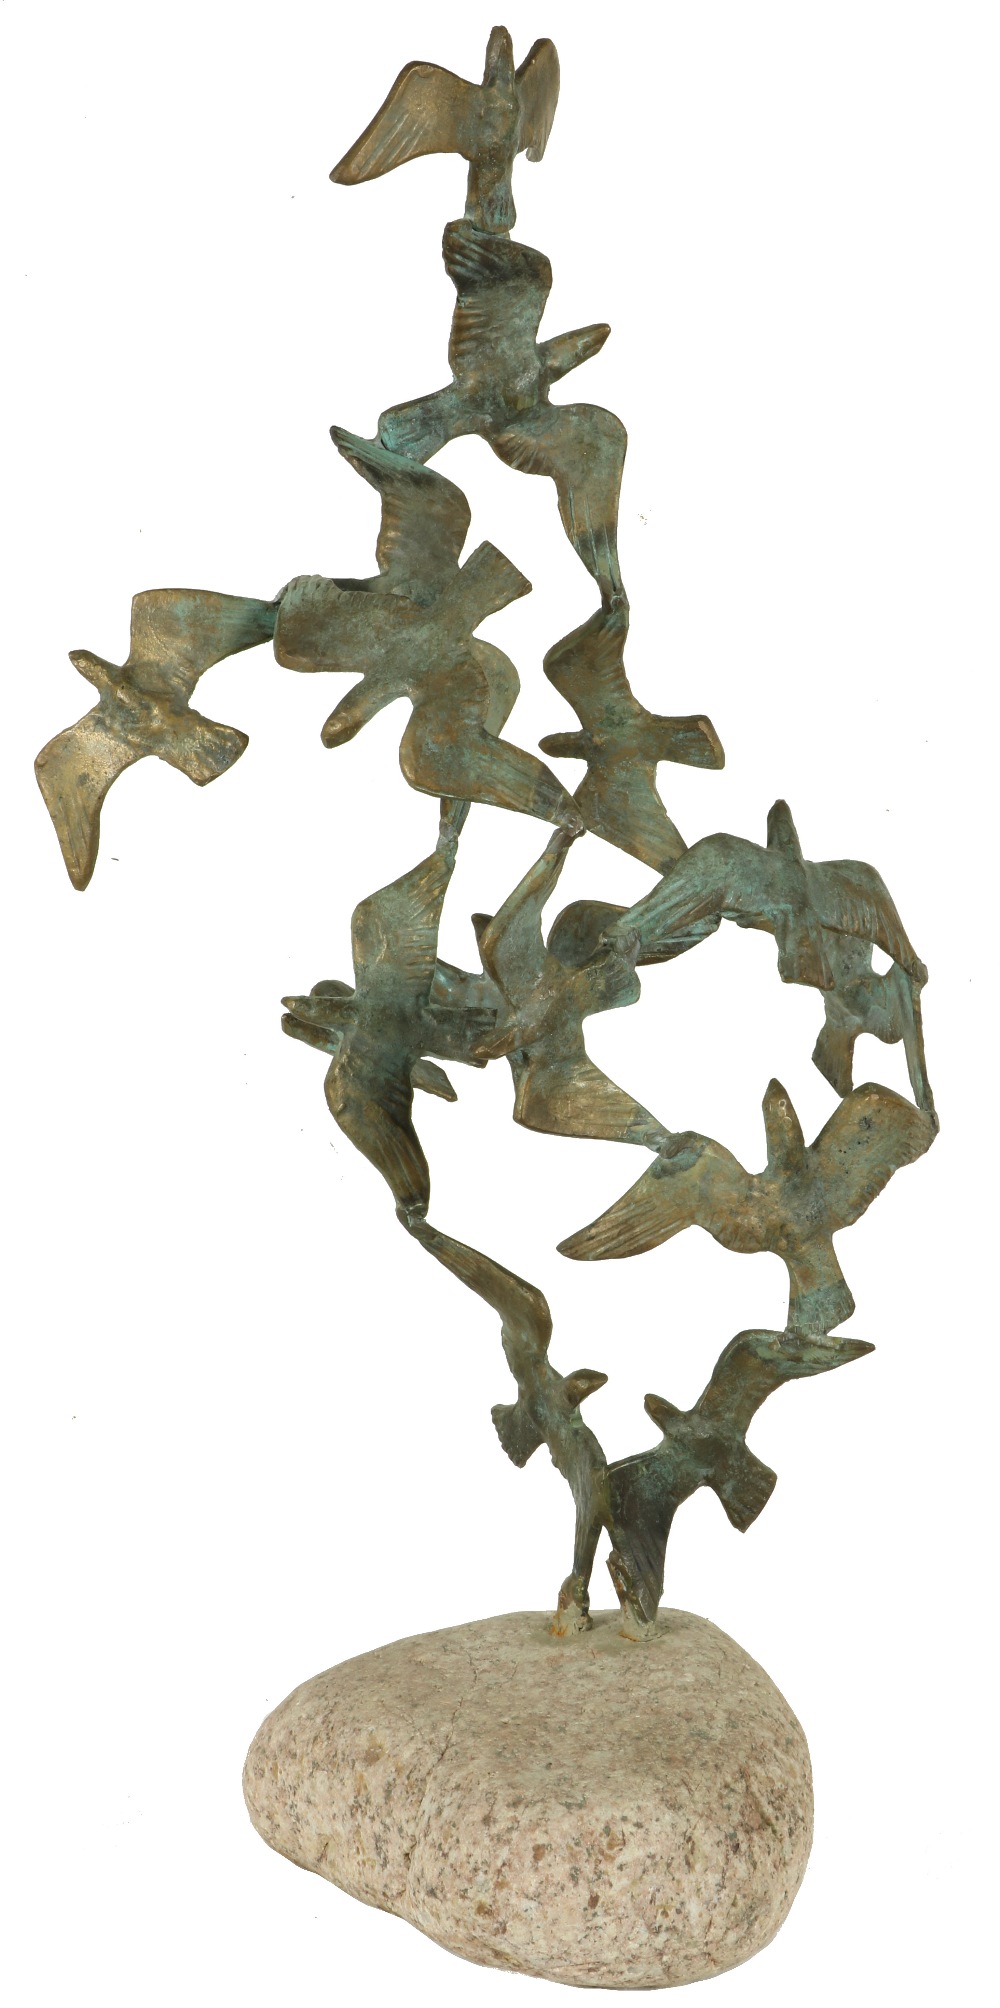 John Behan, Irish, RHA ( b.1938) "Birds in Flight," bronze sculpture, surmounted on natural stone,